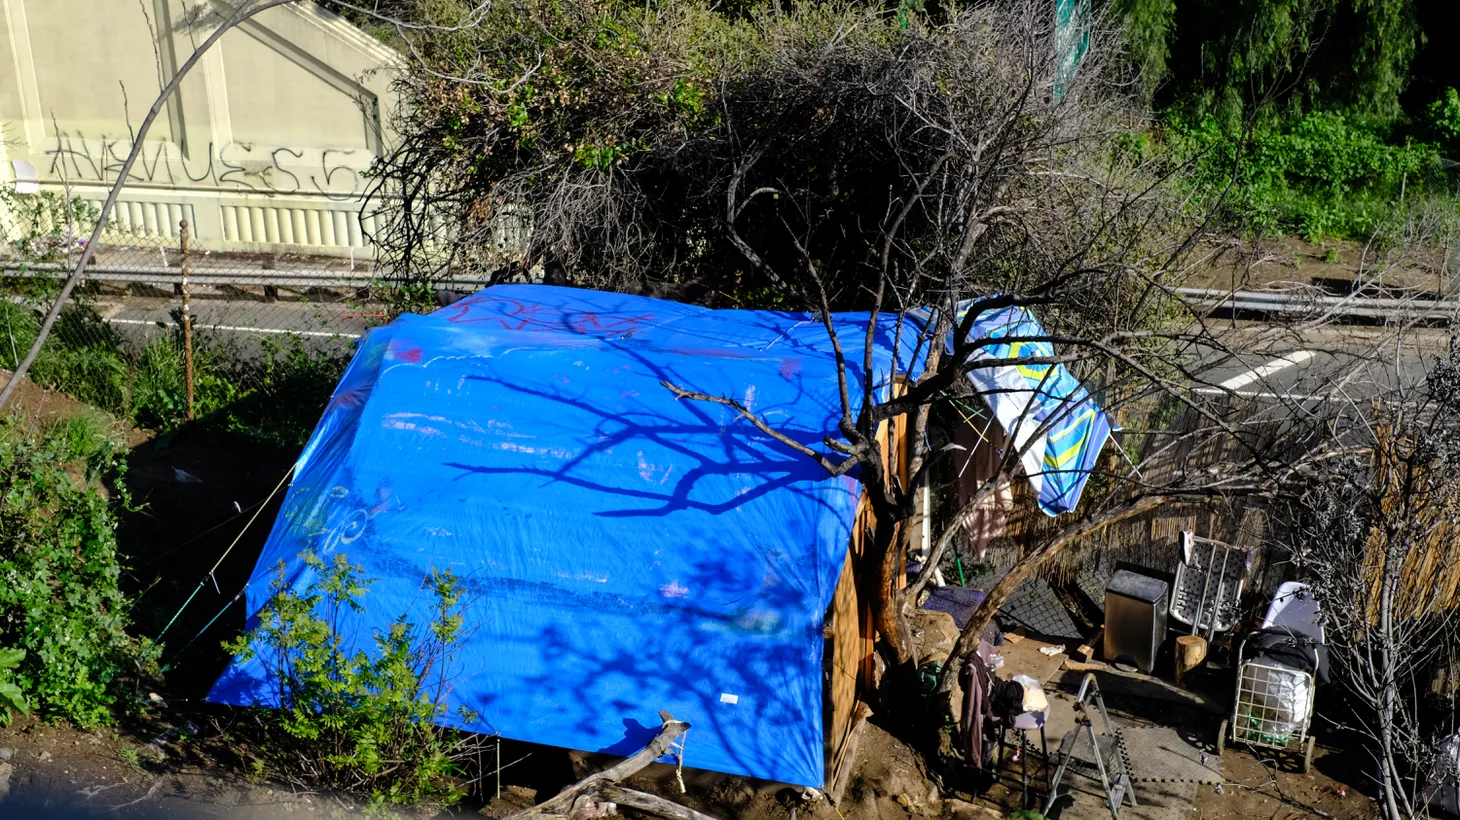 A homeless encampment is seen in Elysian Park, Los Angeles.